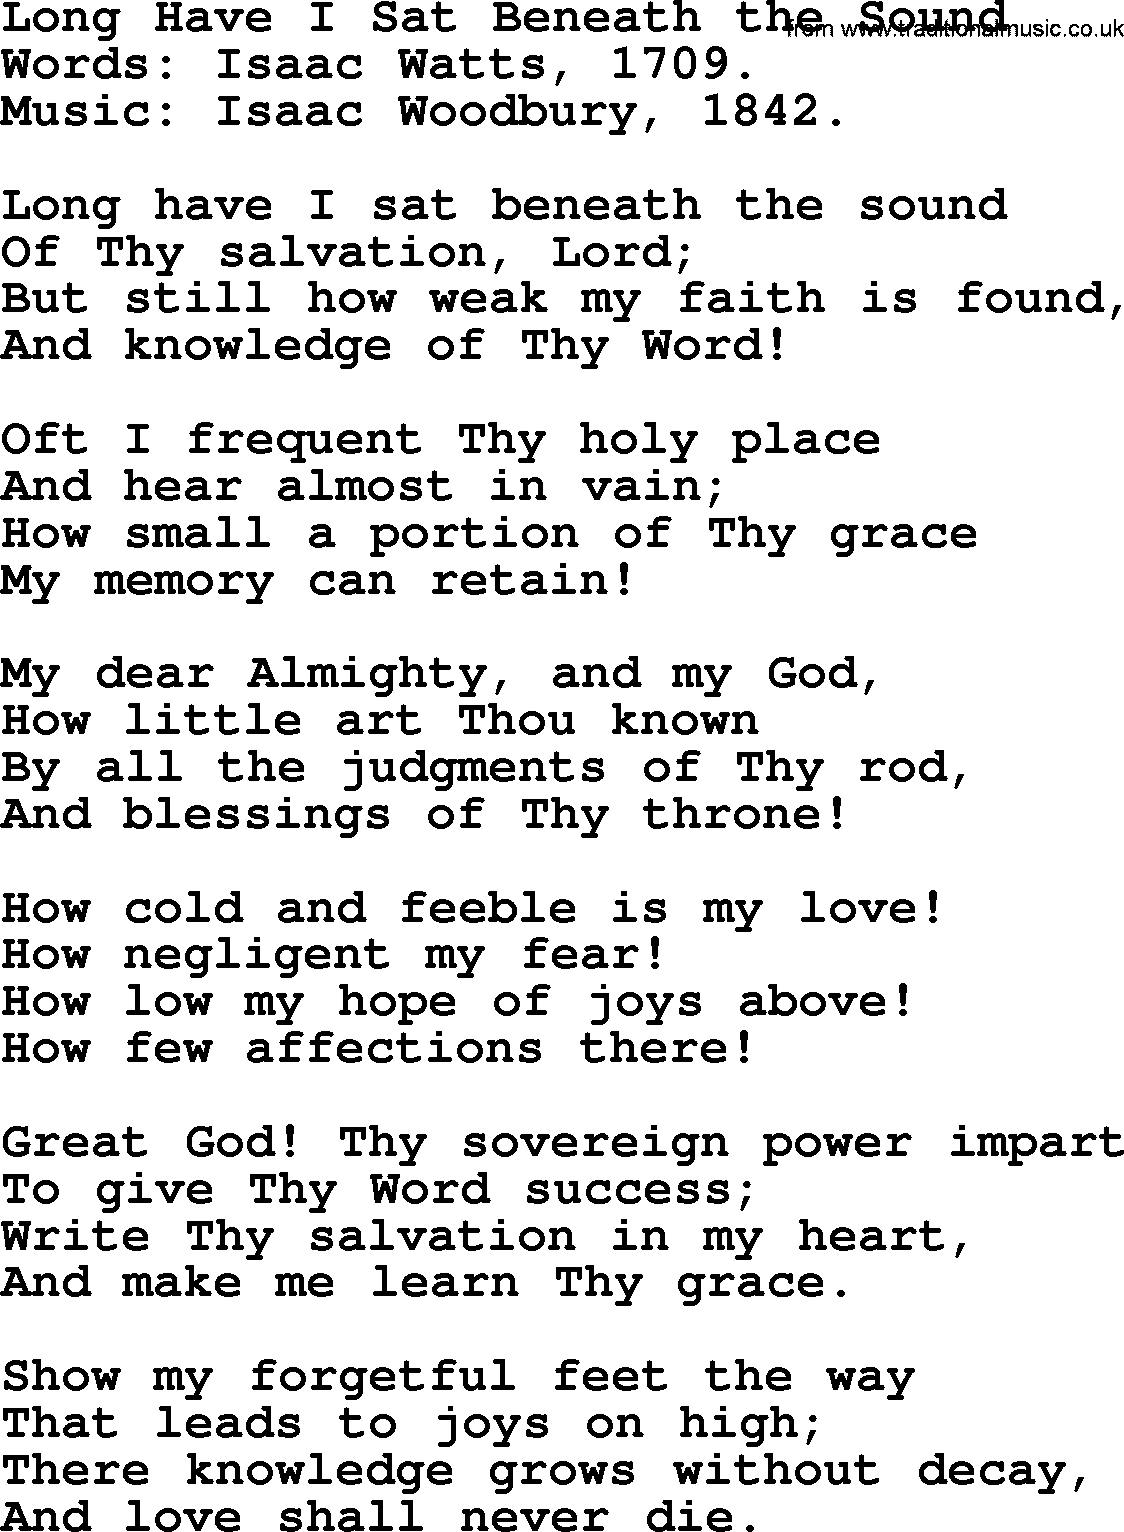 Isaac Watts Christian hymn: Long Have I Sat Beneath the Sound- lyricss